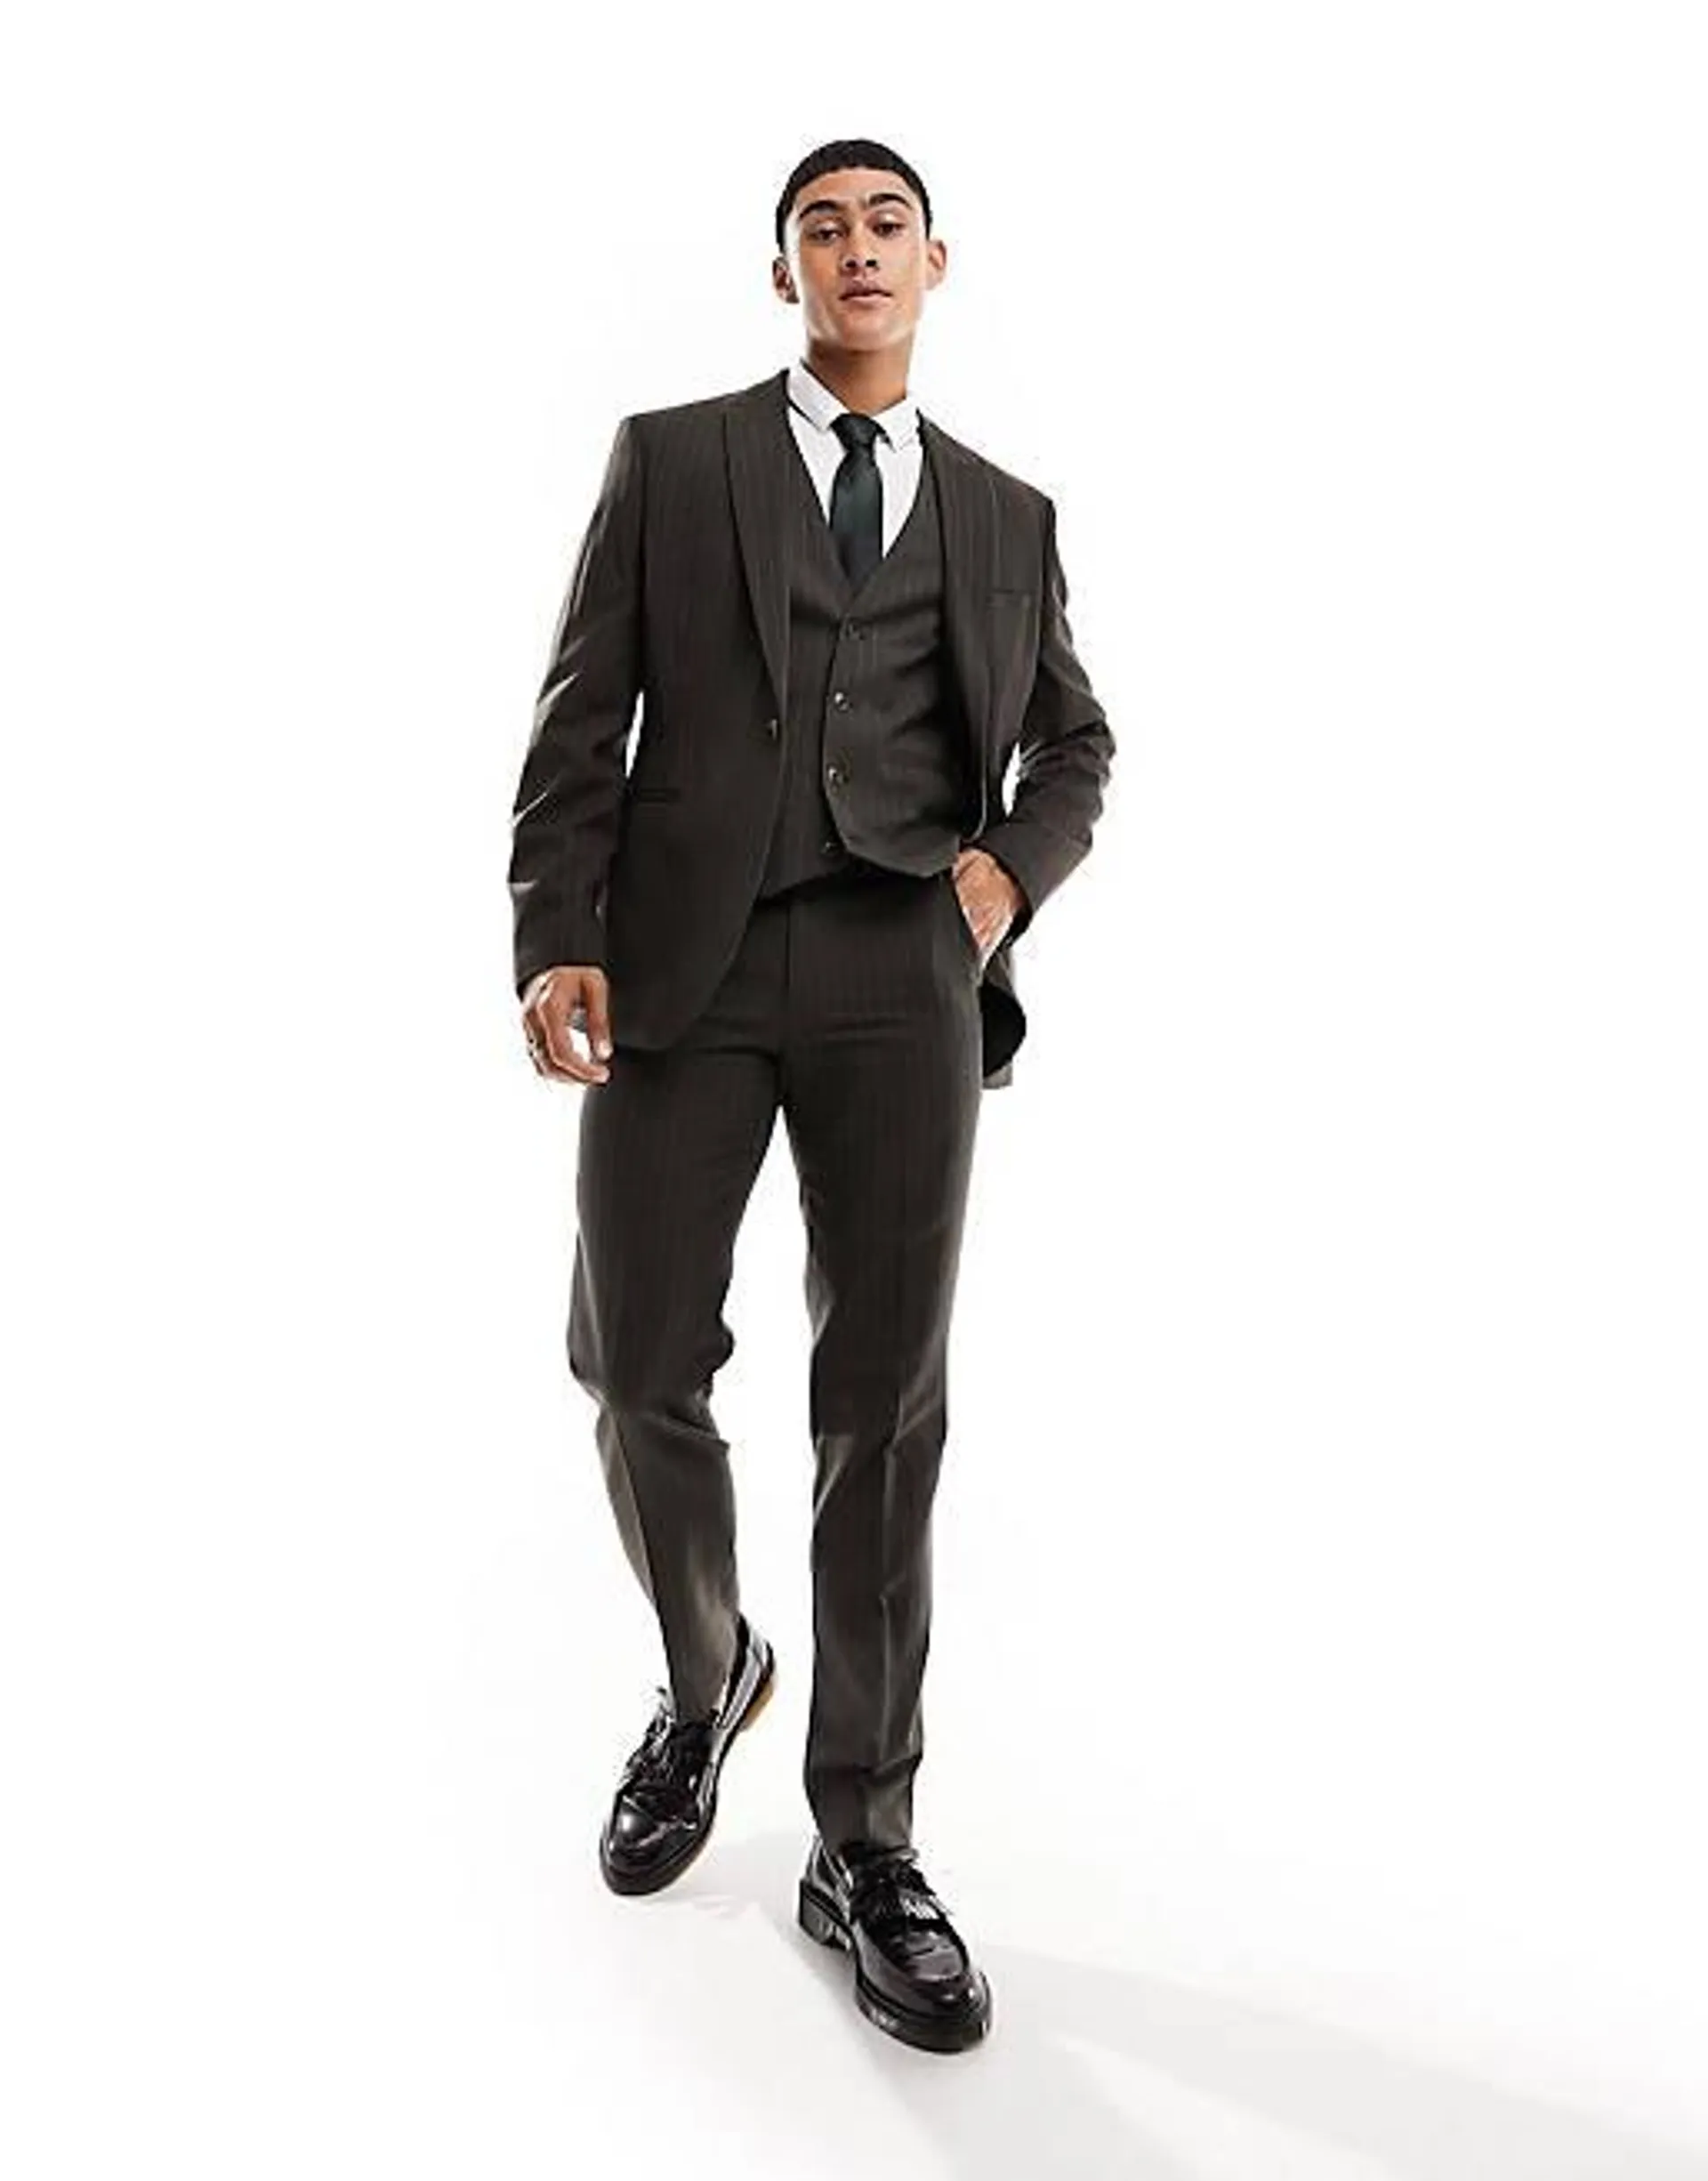 ASOS DESIGN – Brun, kritstrecksrandig, smal kostym